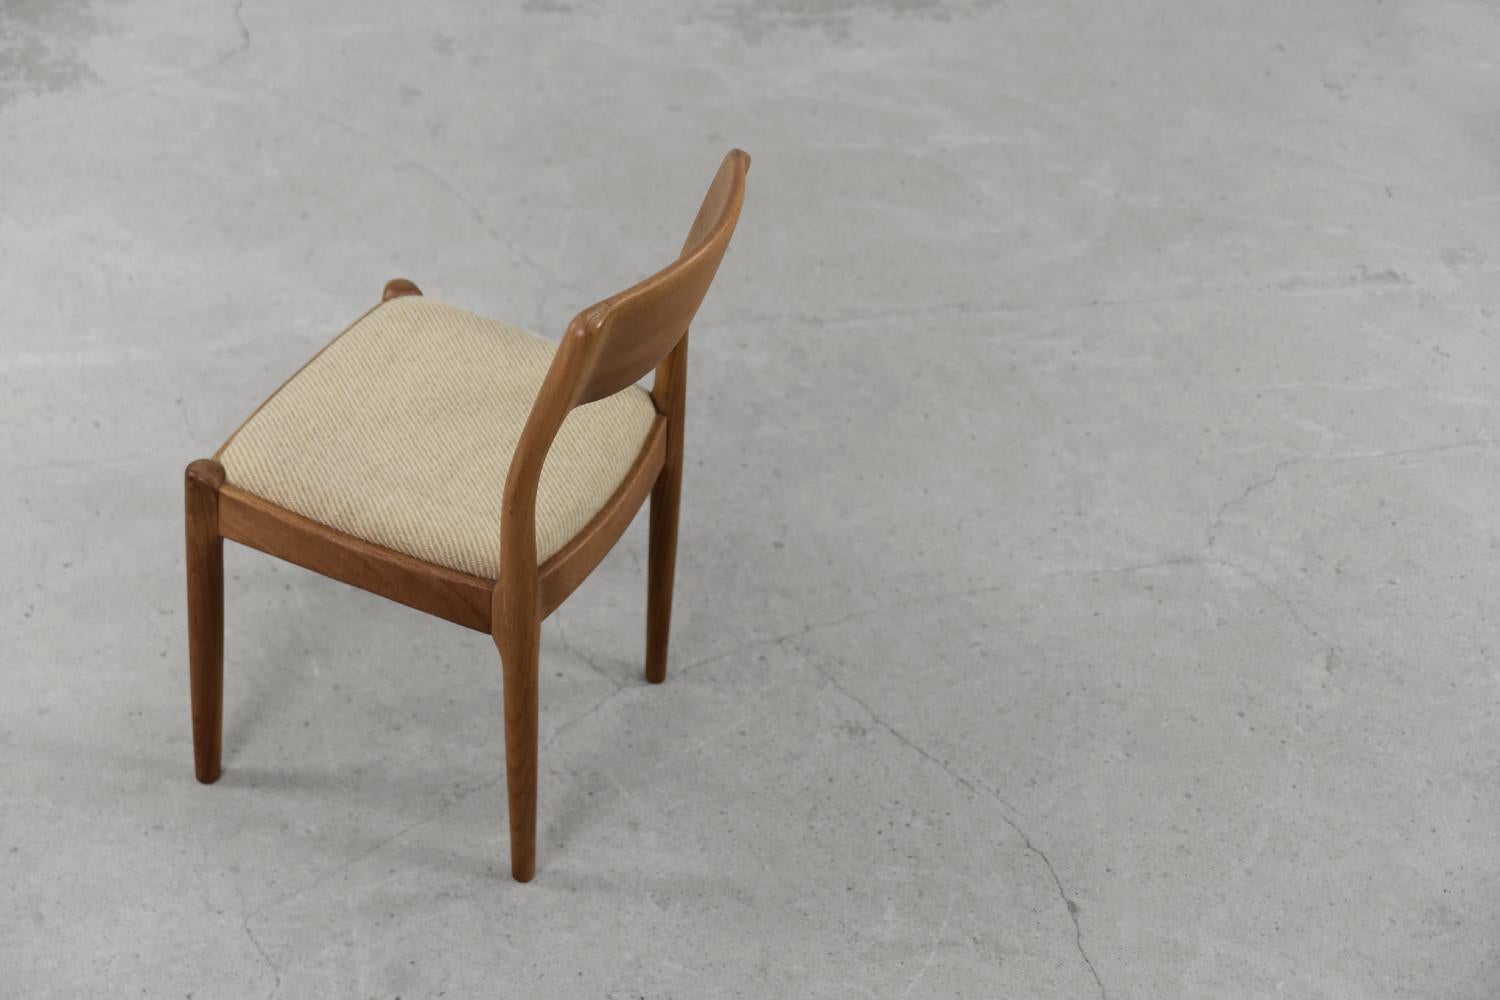 Mid-20th Century Vintage Mid-Century Modern Teak Wood & Fabric Dining Chair by Juul Kristensen For Sale